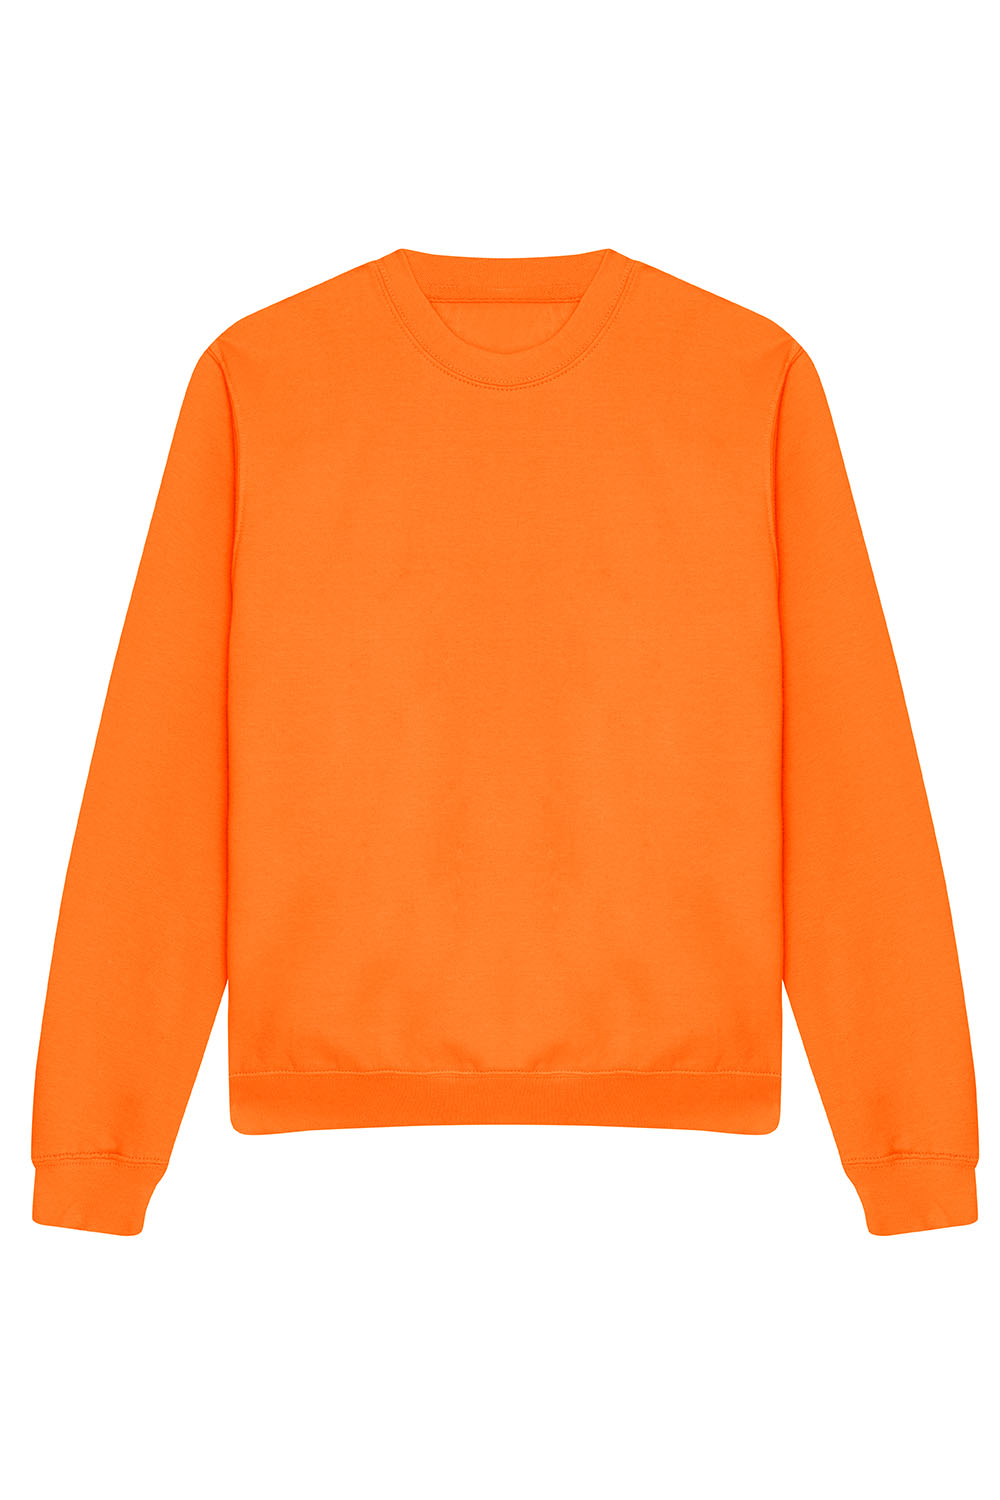 Plain Sweatshirt In Orange Crush (Single).